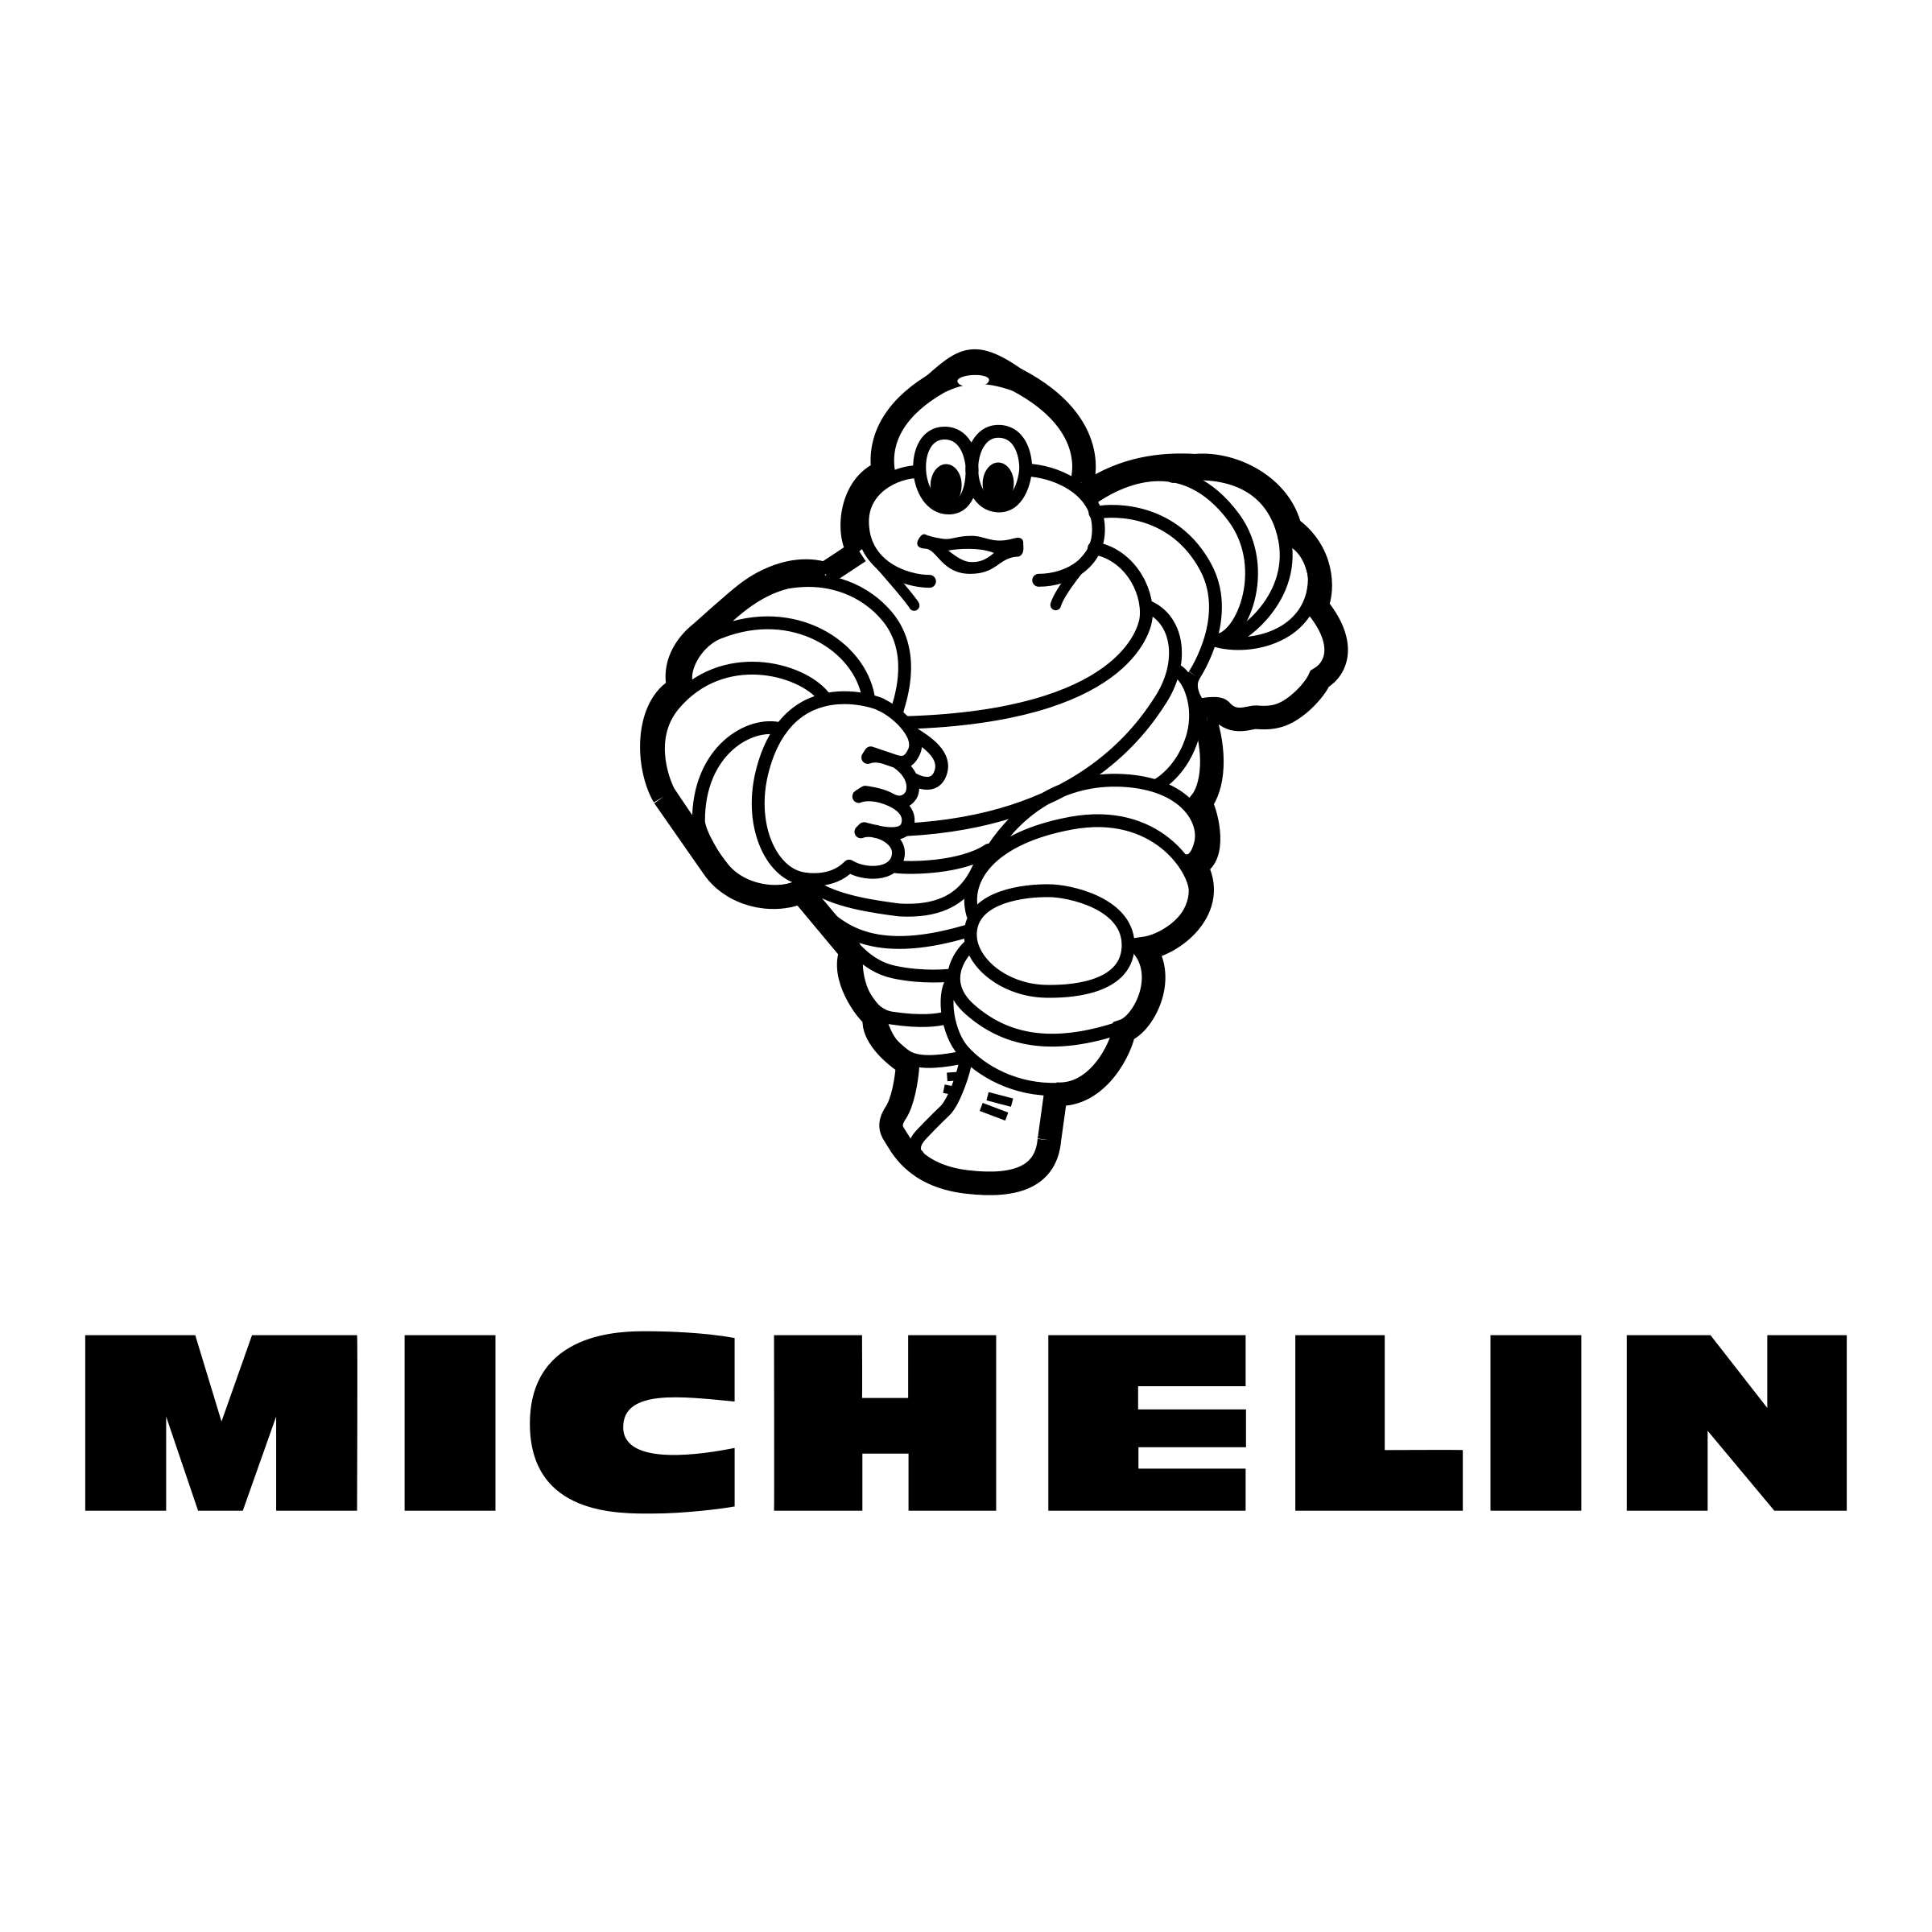 Michelin Logo - Michelin Logo PNG Transparent & SVG Vector - Freebie Supply